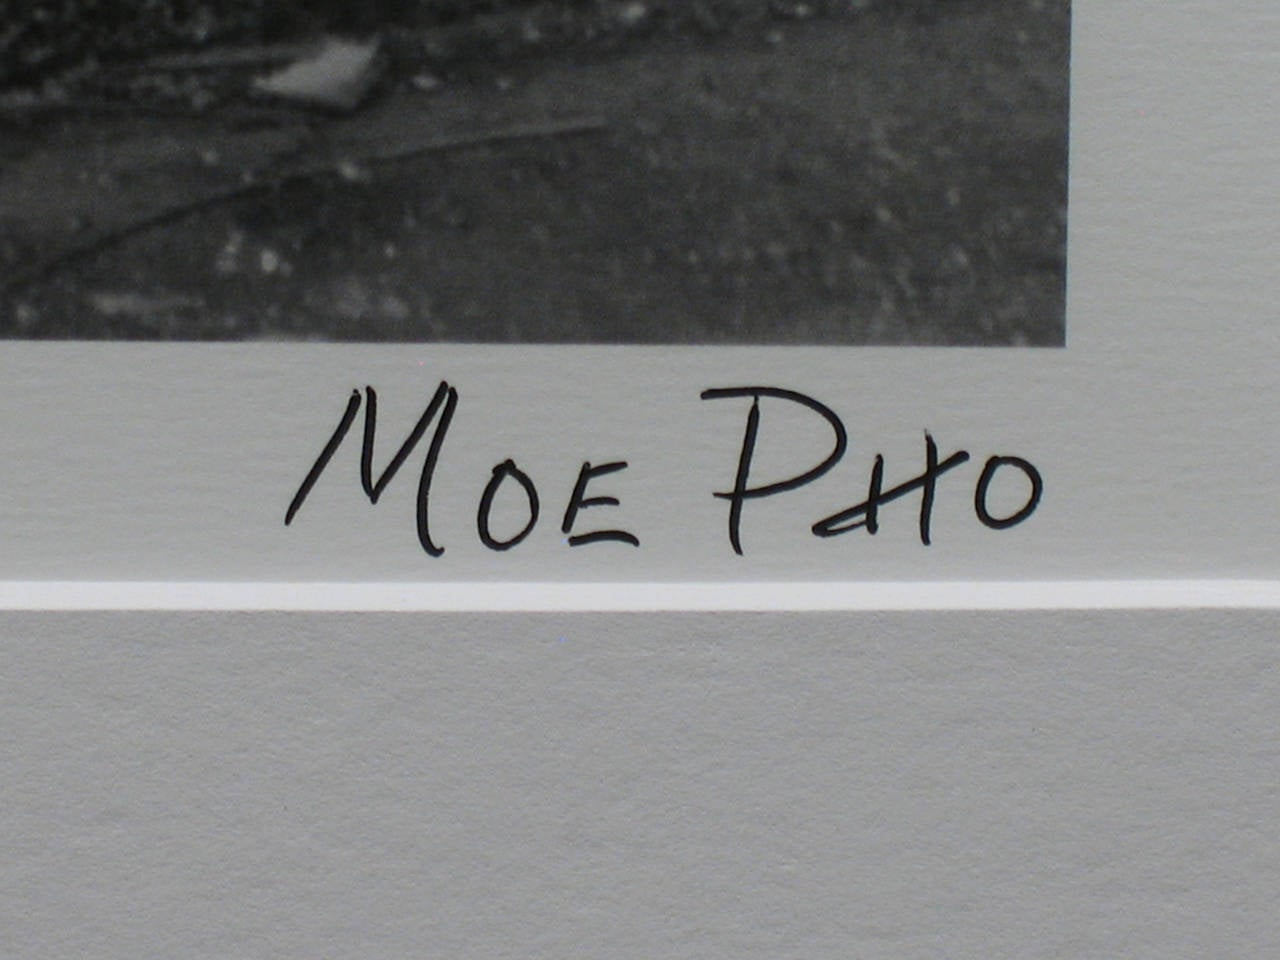 Moe Pho [Detroit, MI]
Kid Fester
(Coogan Conflation)
2014
1/30
Archival Pigment Print
17 x 14 inches